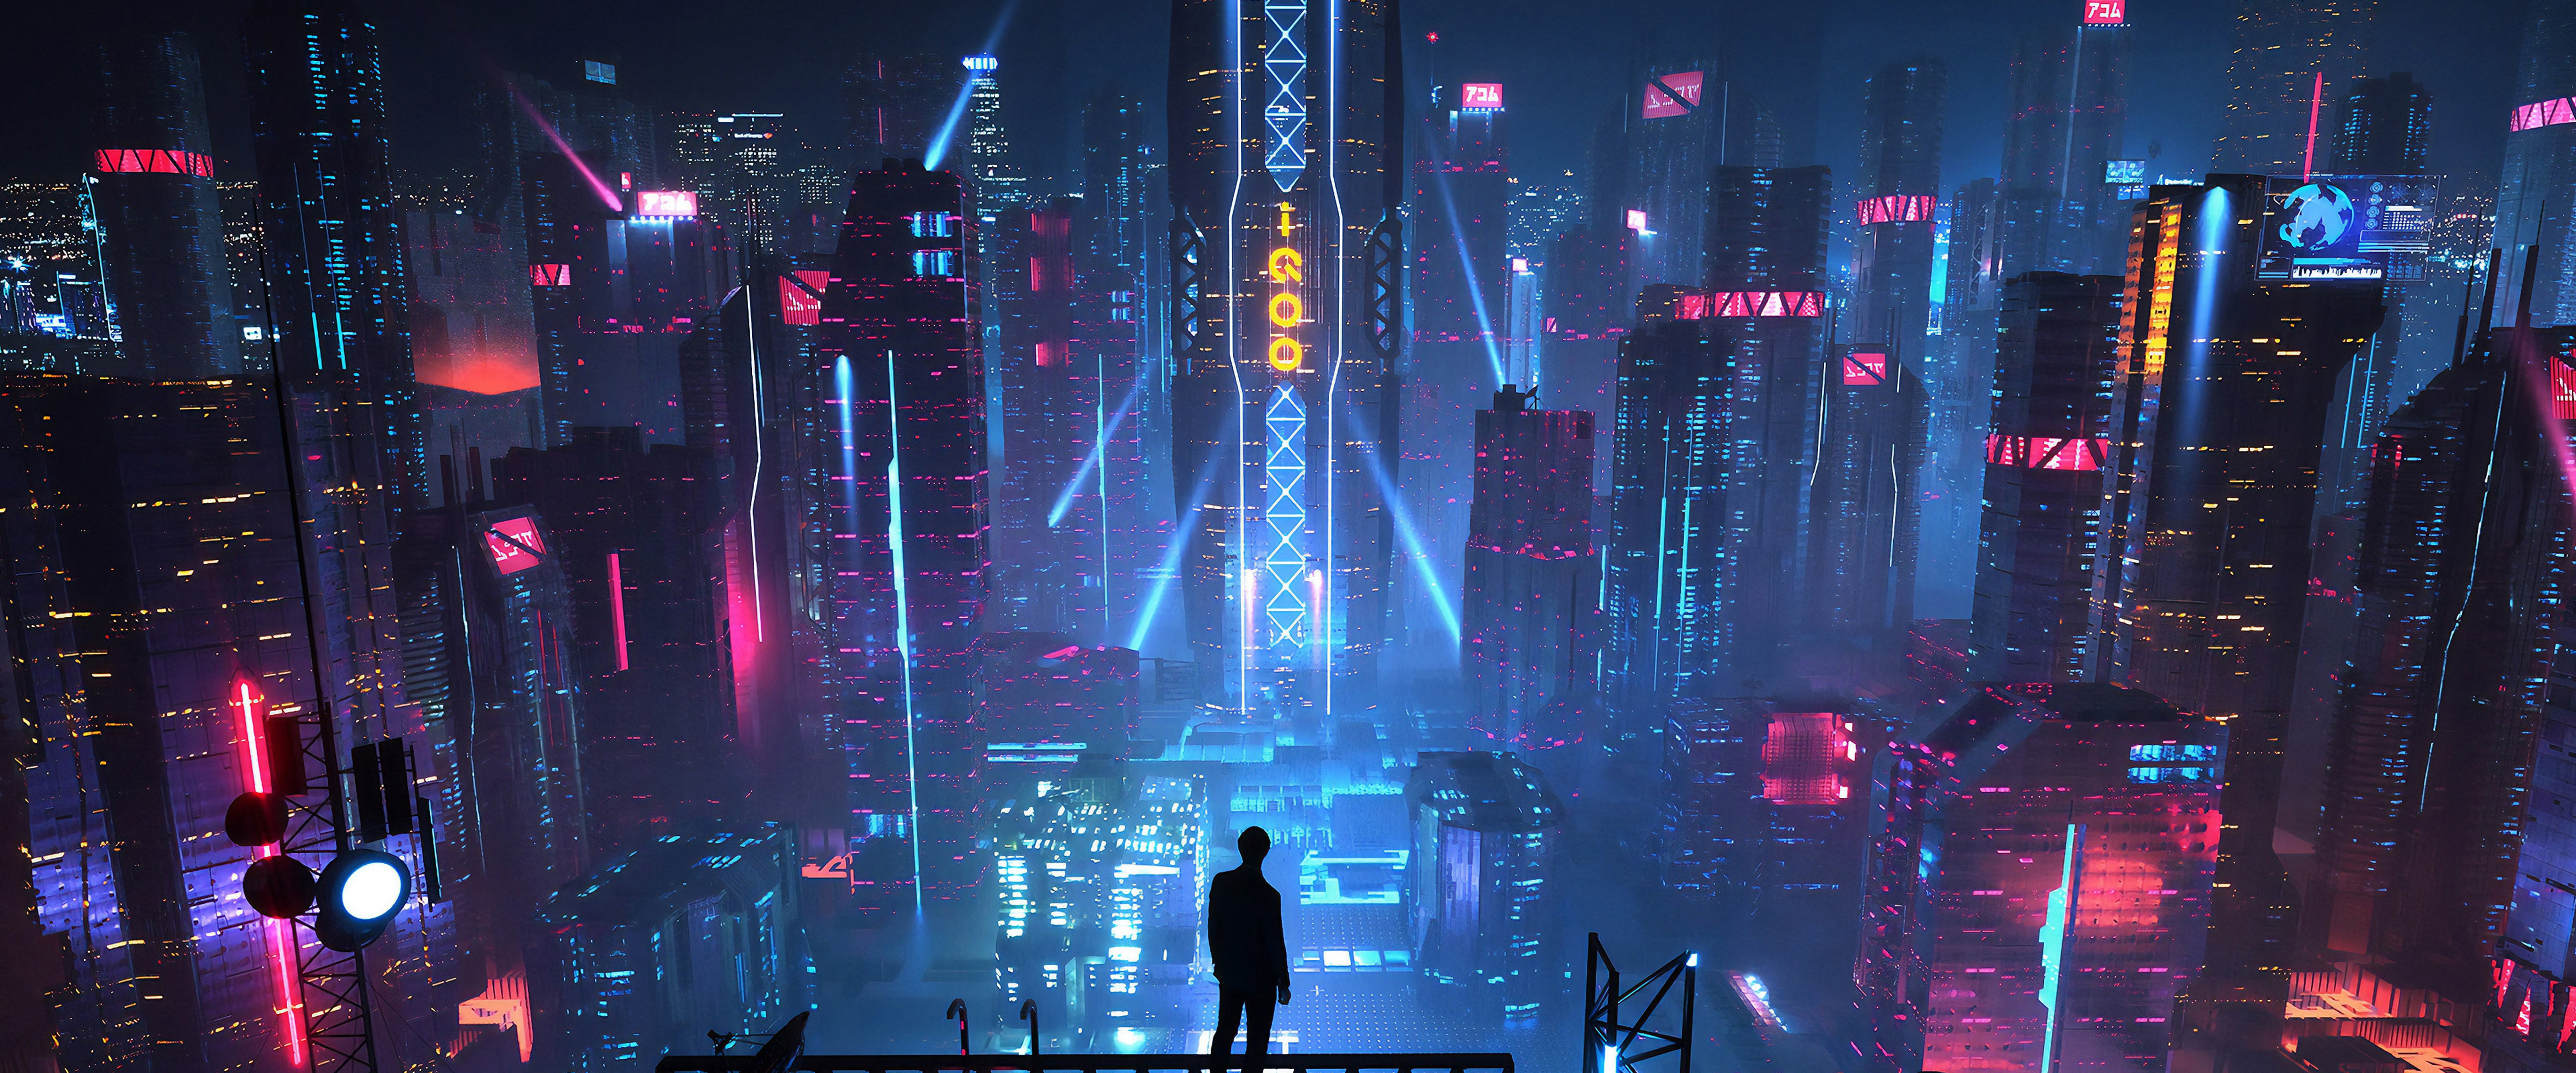 Sci Fi City Buildings Night Cityscape 4k Wallpaper